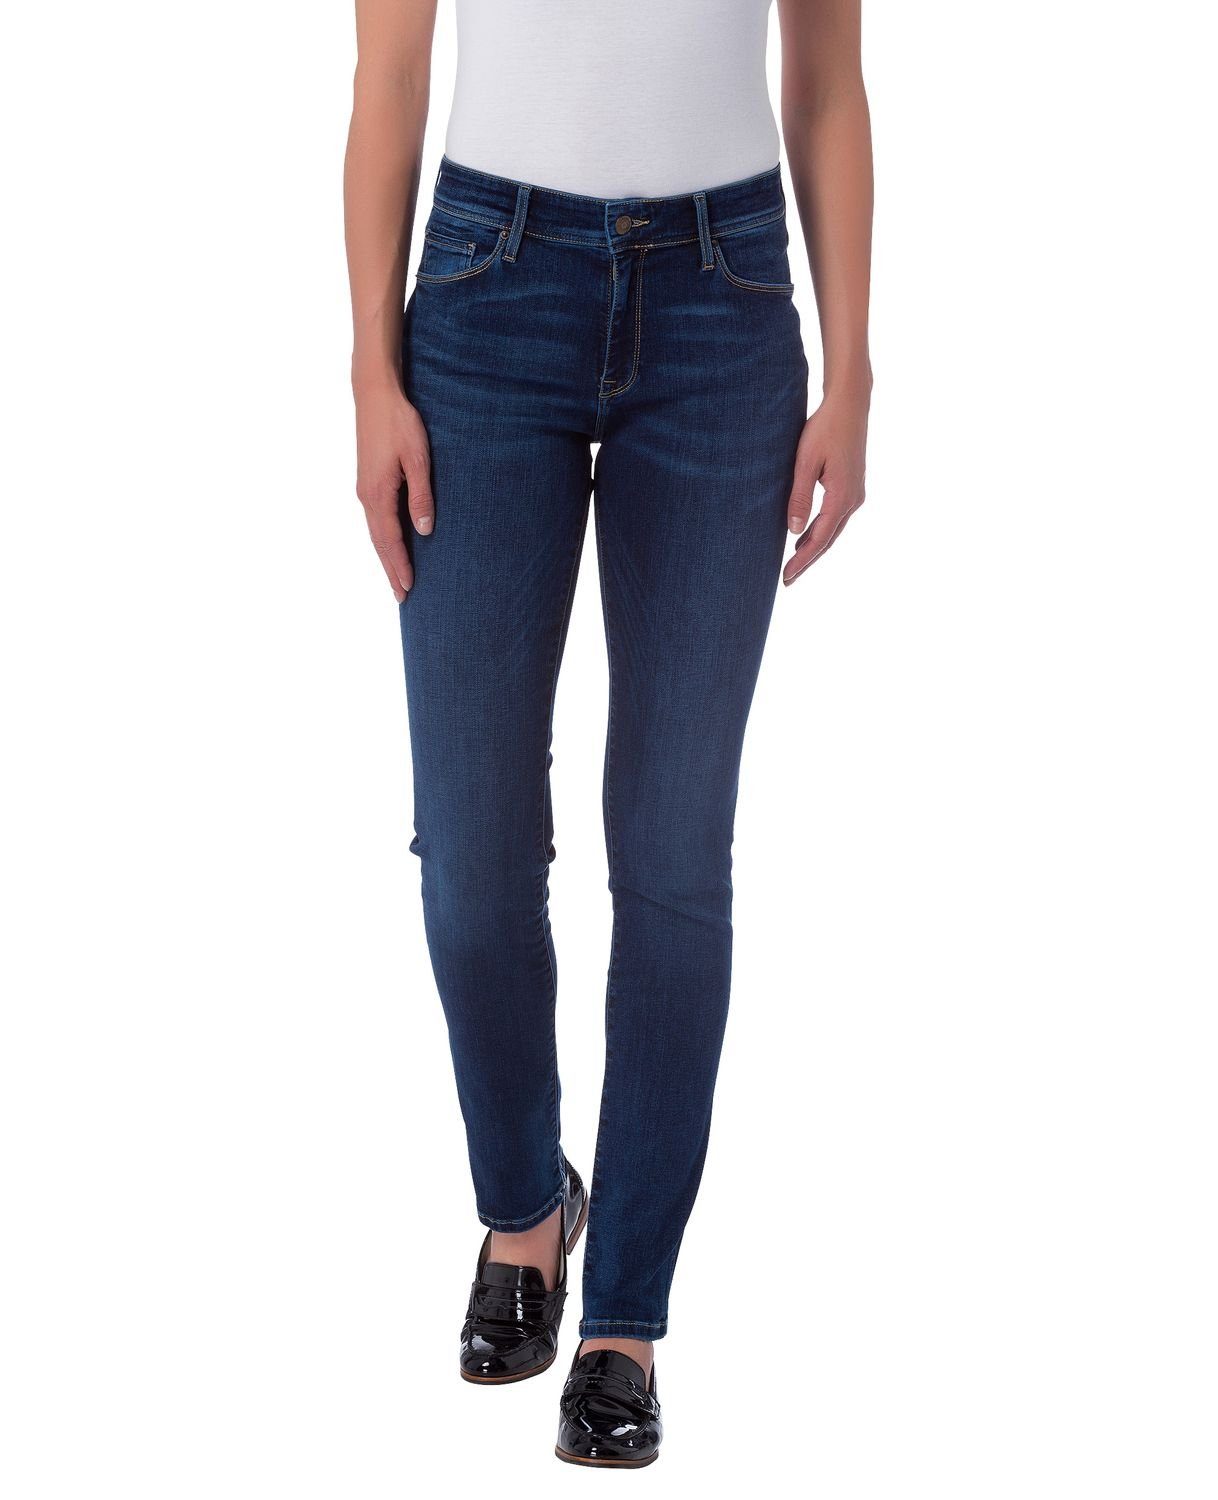 Jeanshose Slim-fit-Jeans Stretch JEANS® CROSS Anya mit